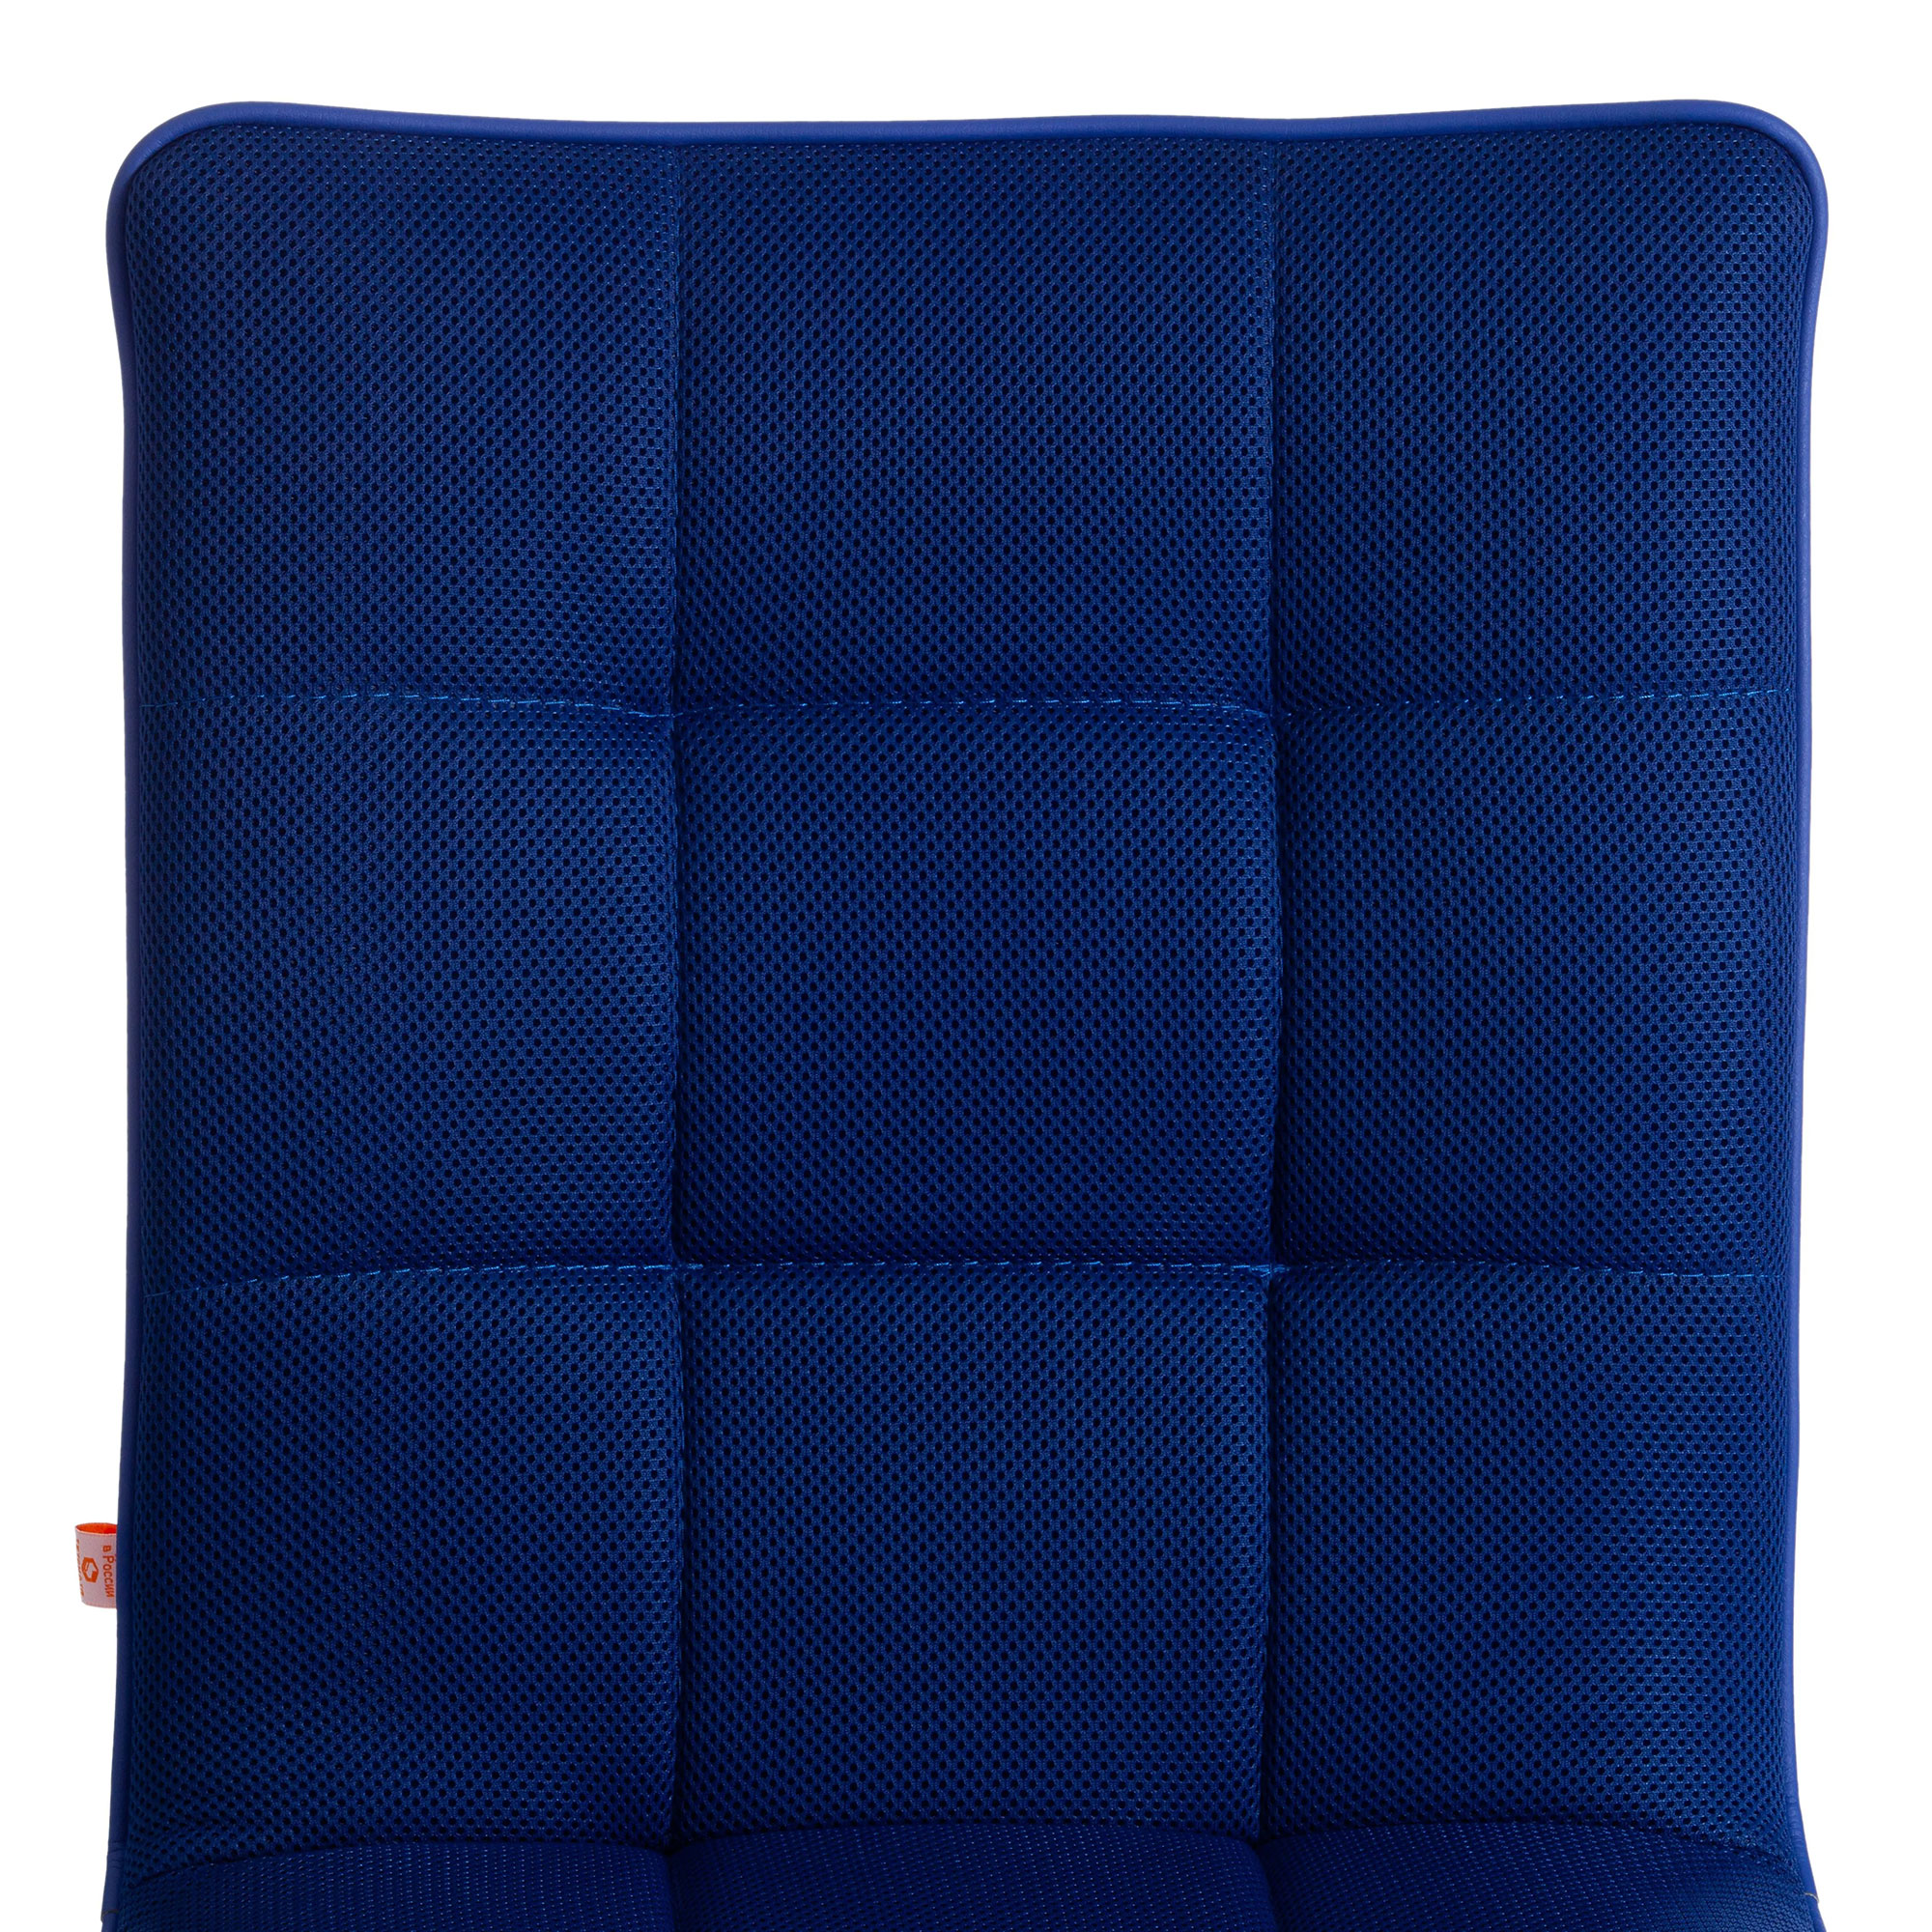 Компьютерное кресло TC Zero синее 45х40х96 см (19275), цвет серебряный - фото 7